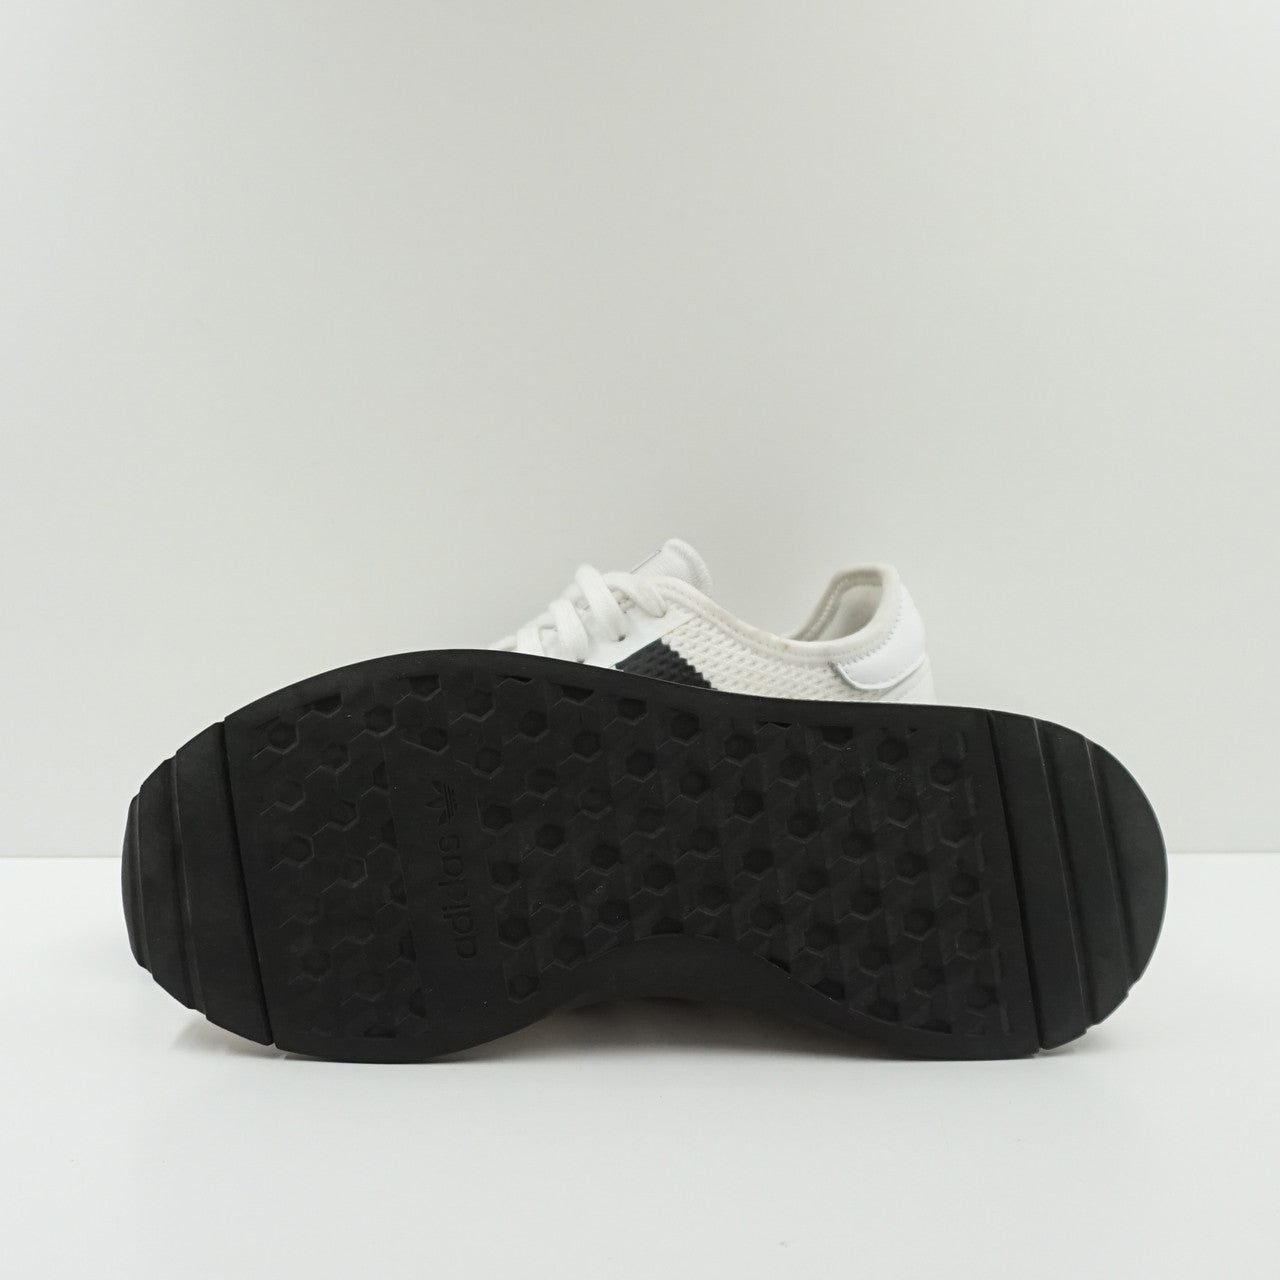 Adidas N-5923 Black White